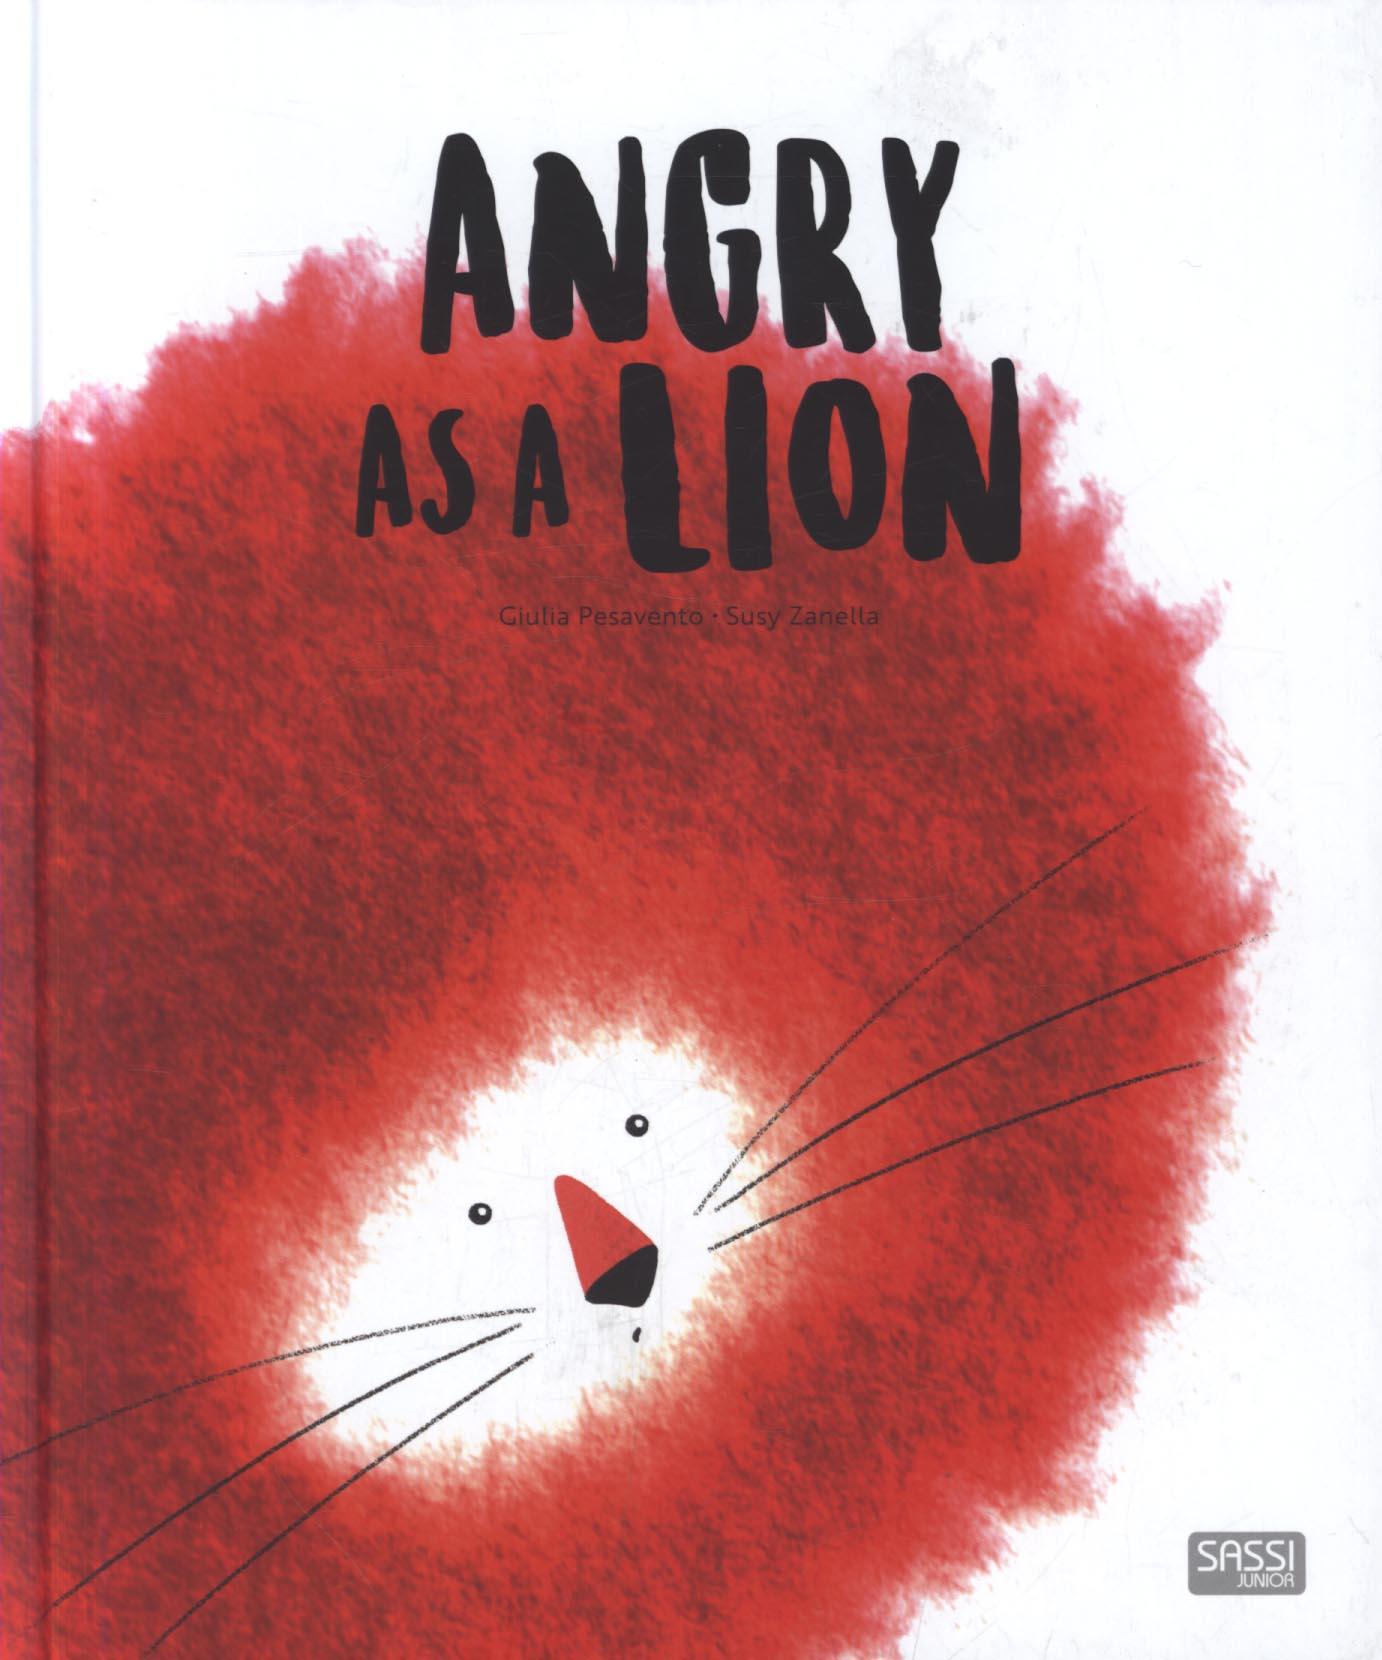 Angry As A Lion - Giulia Pesavento